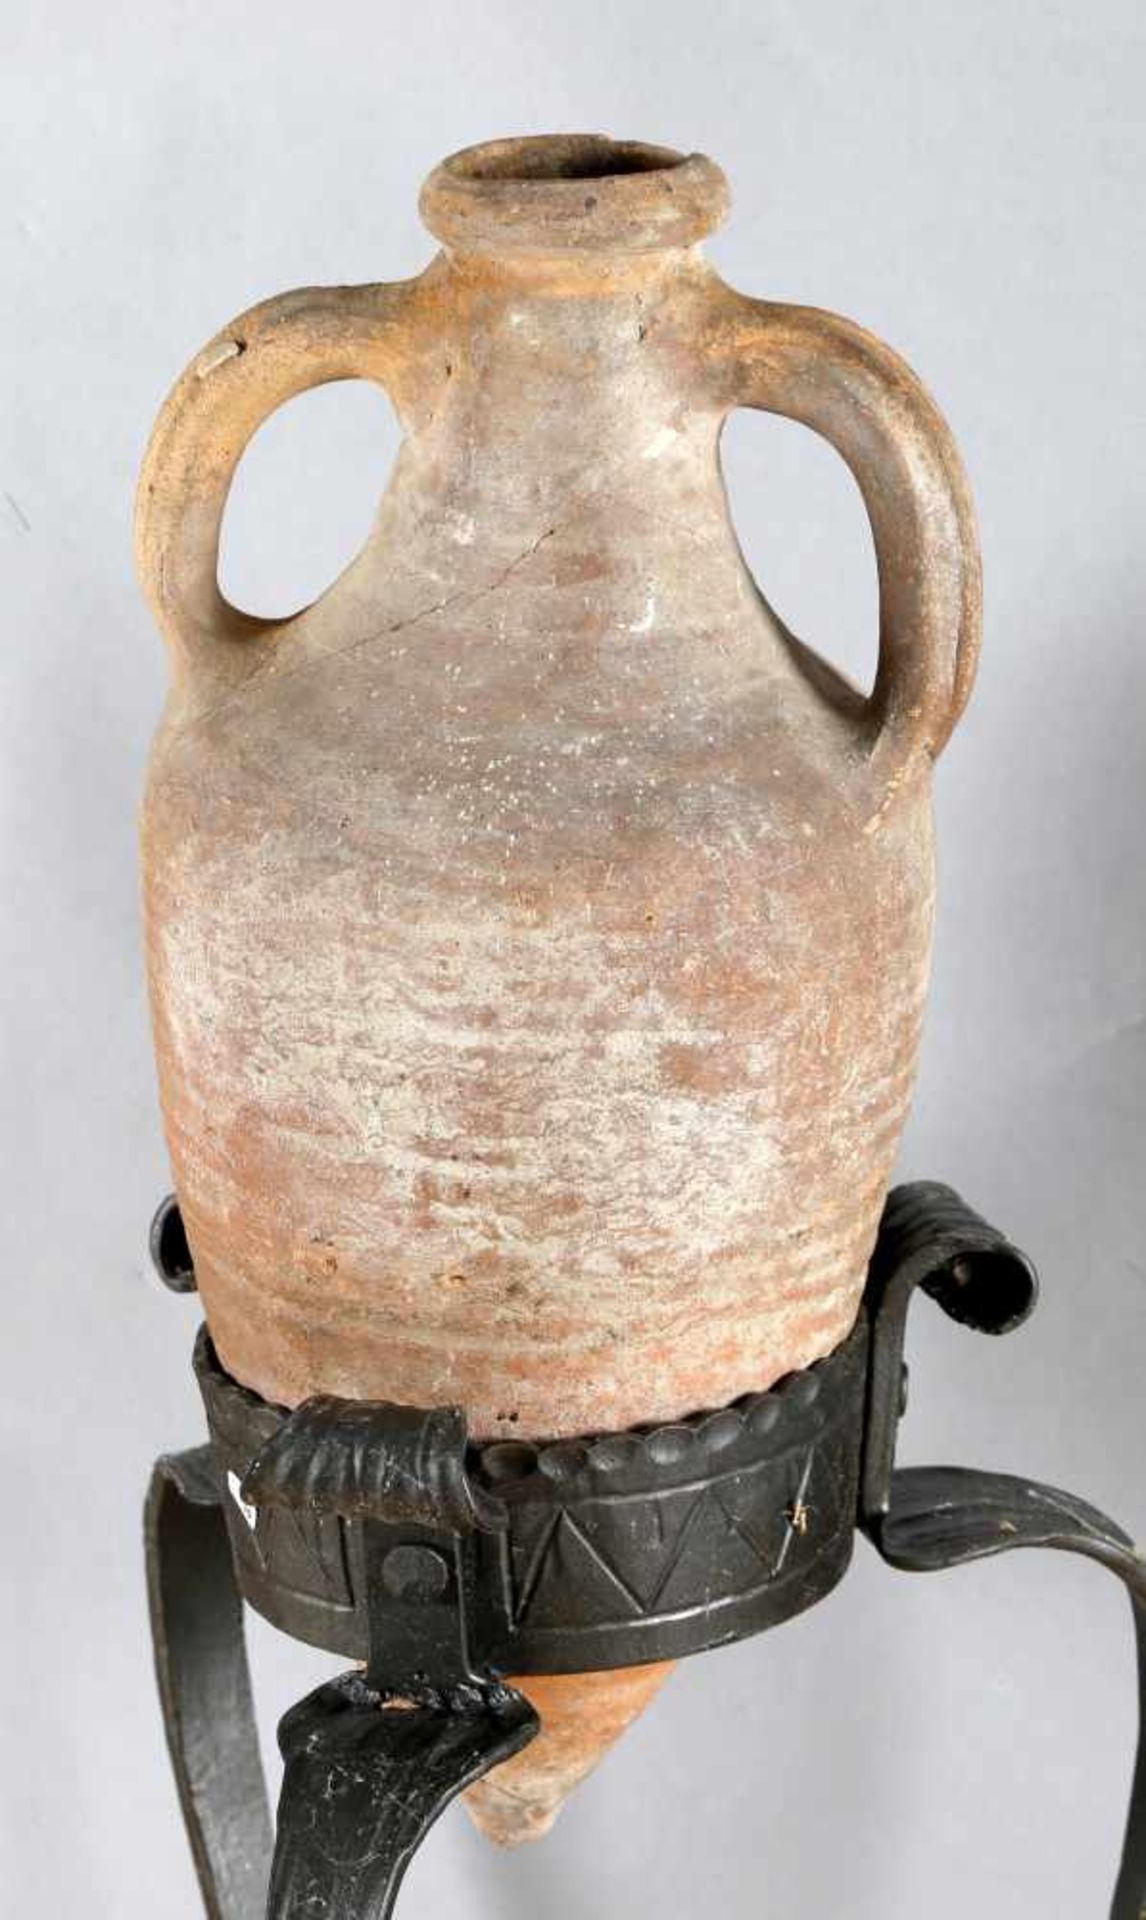 Keramik-Amphore aus rotem Ton, wohl spätantik, möglw. römischmit 2 Henkeln auf Schulter